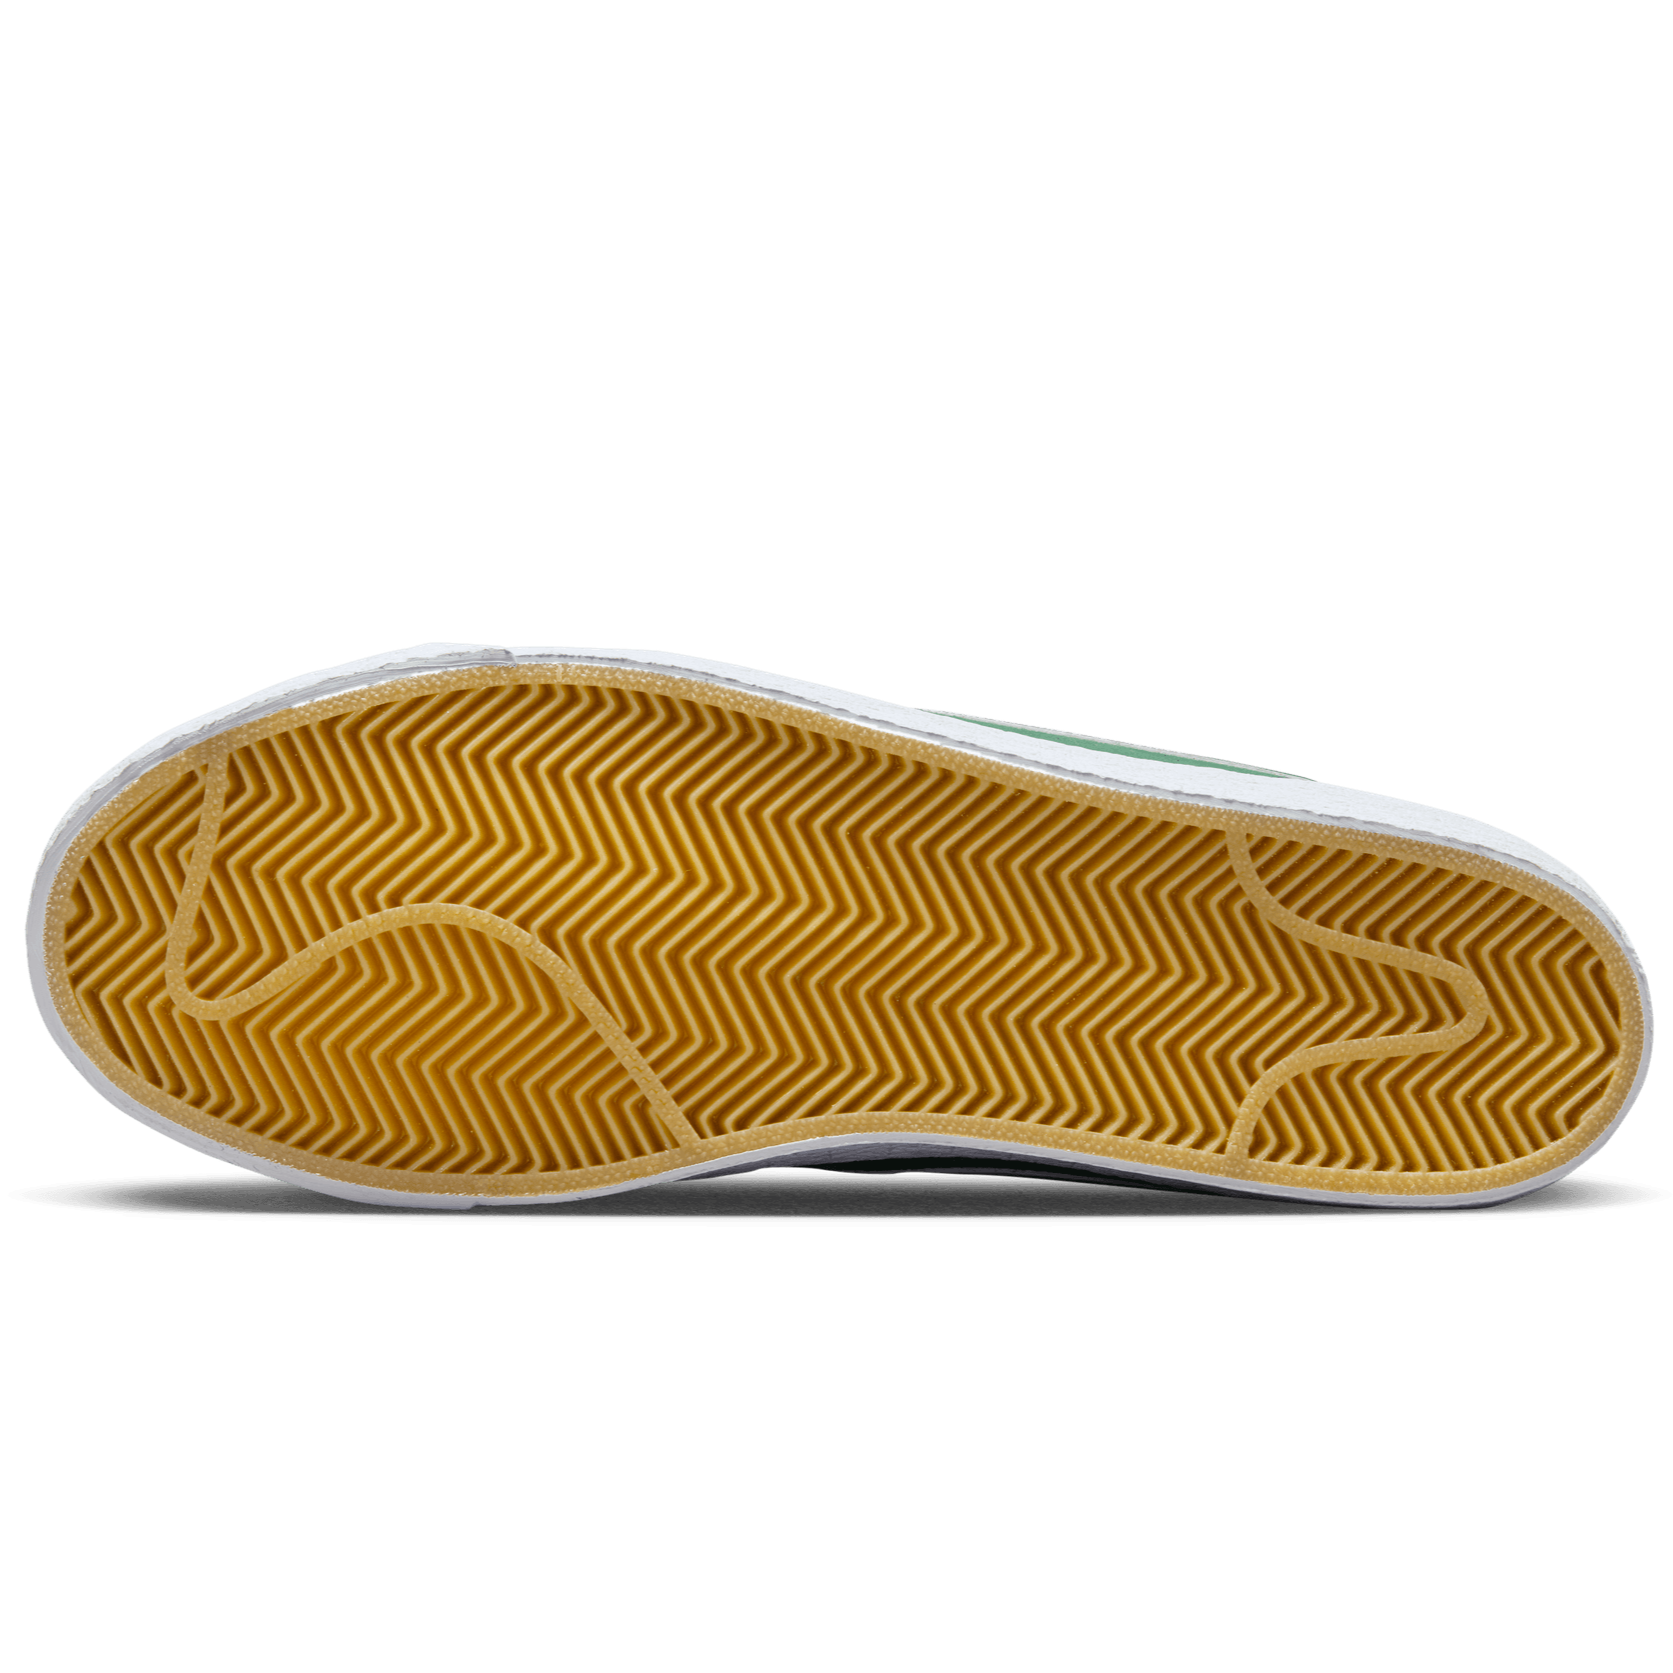 Fir/White Nike SB Blazer Mid Skateboard Shoe Bottom